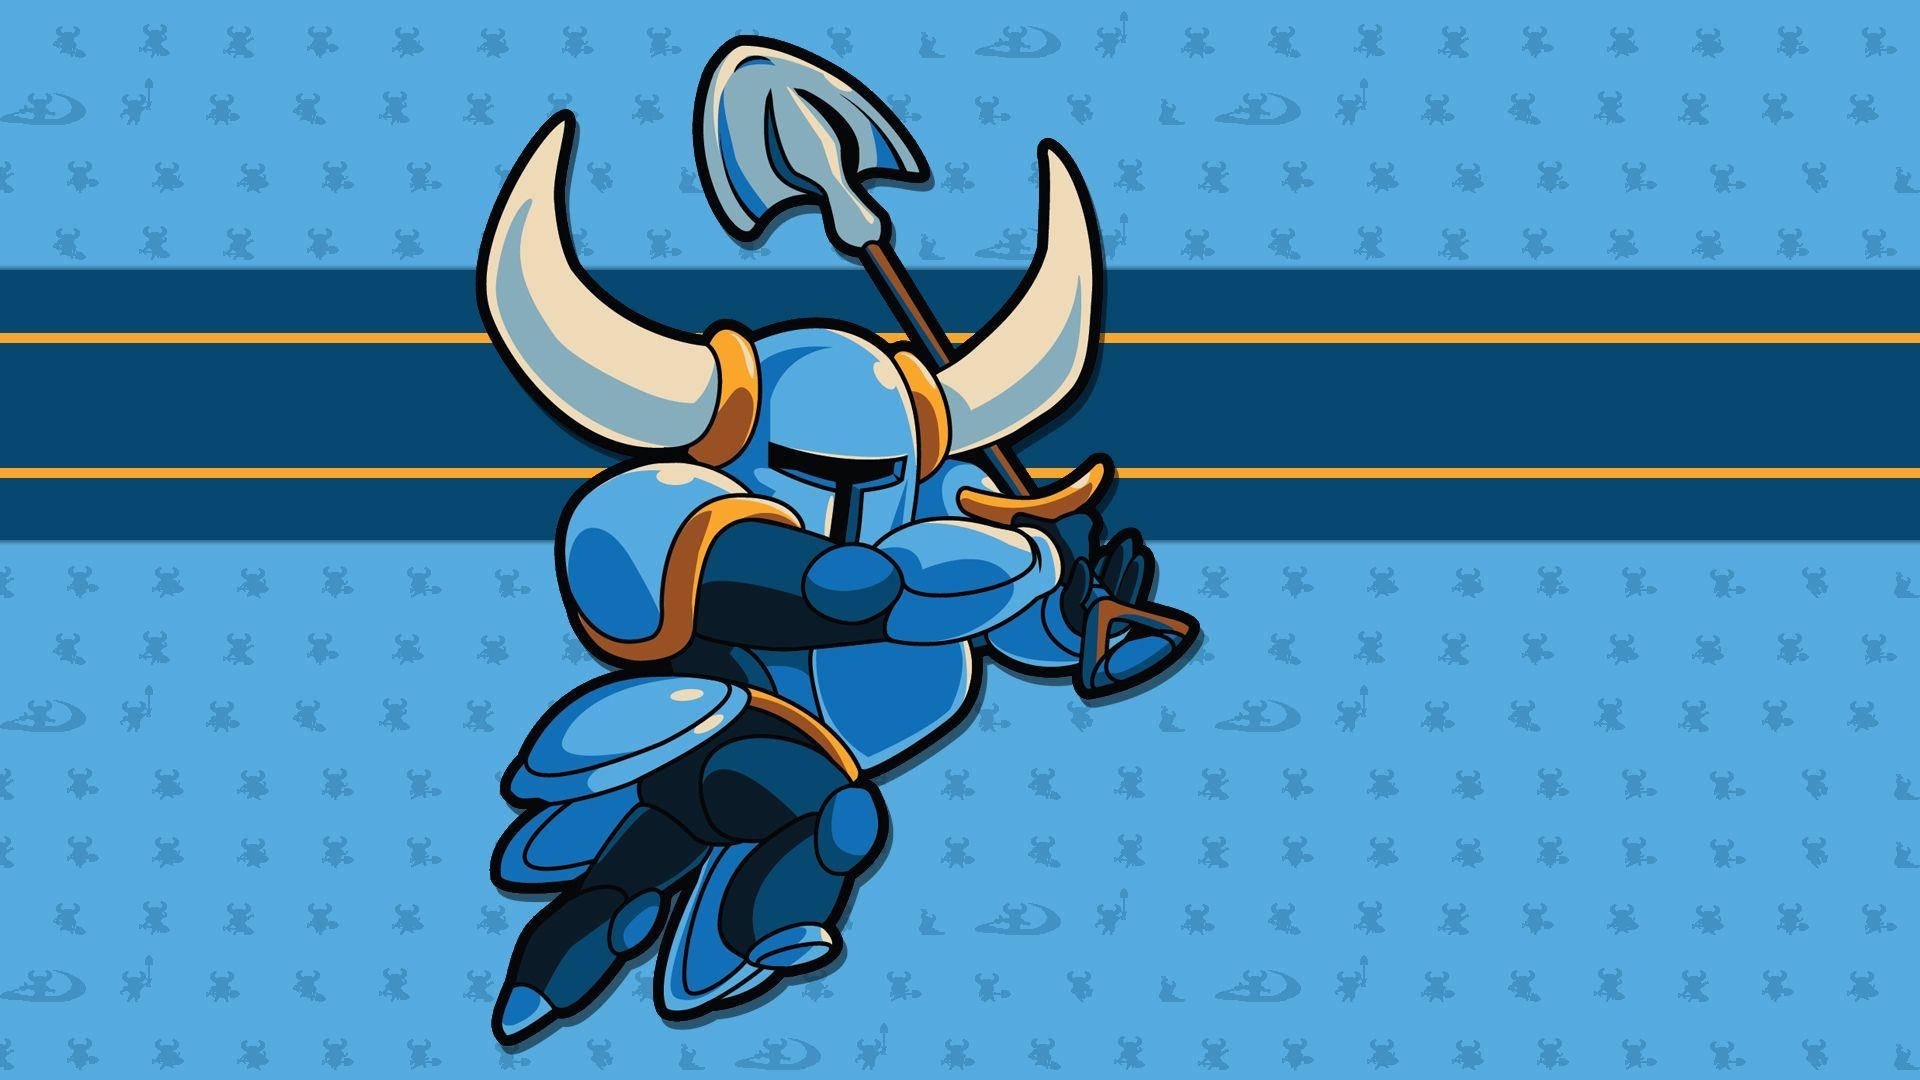 Shovel Knight In Blue Armor Background